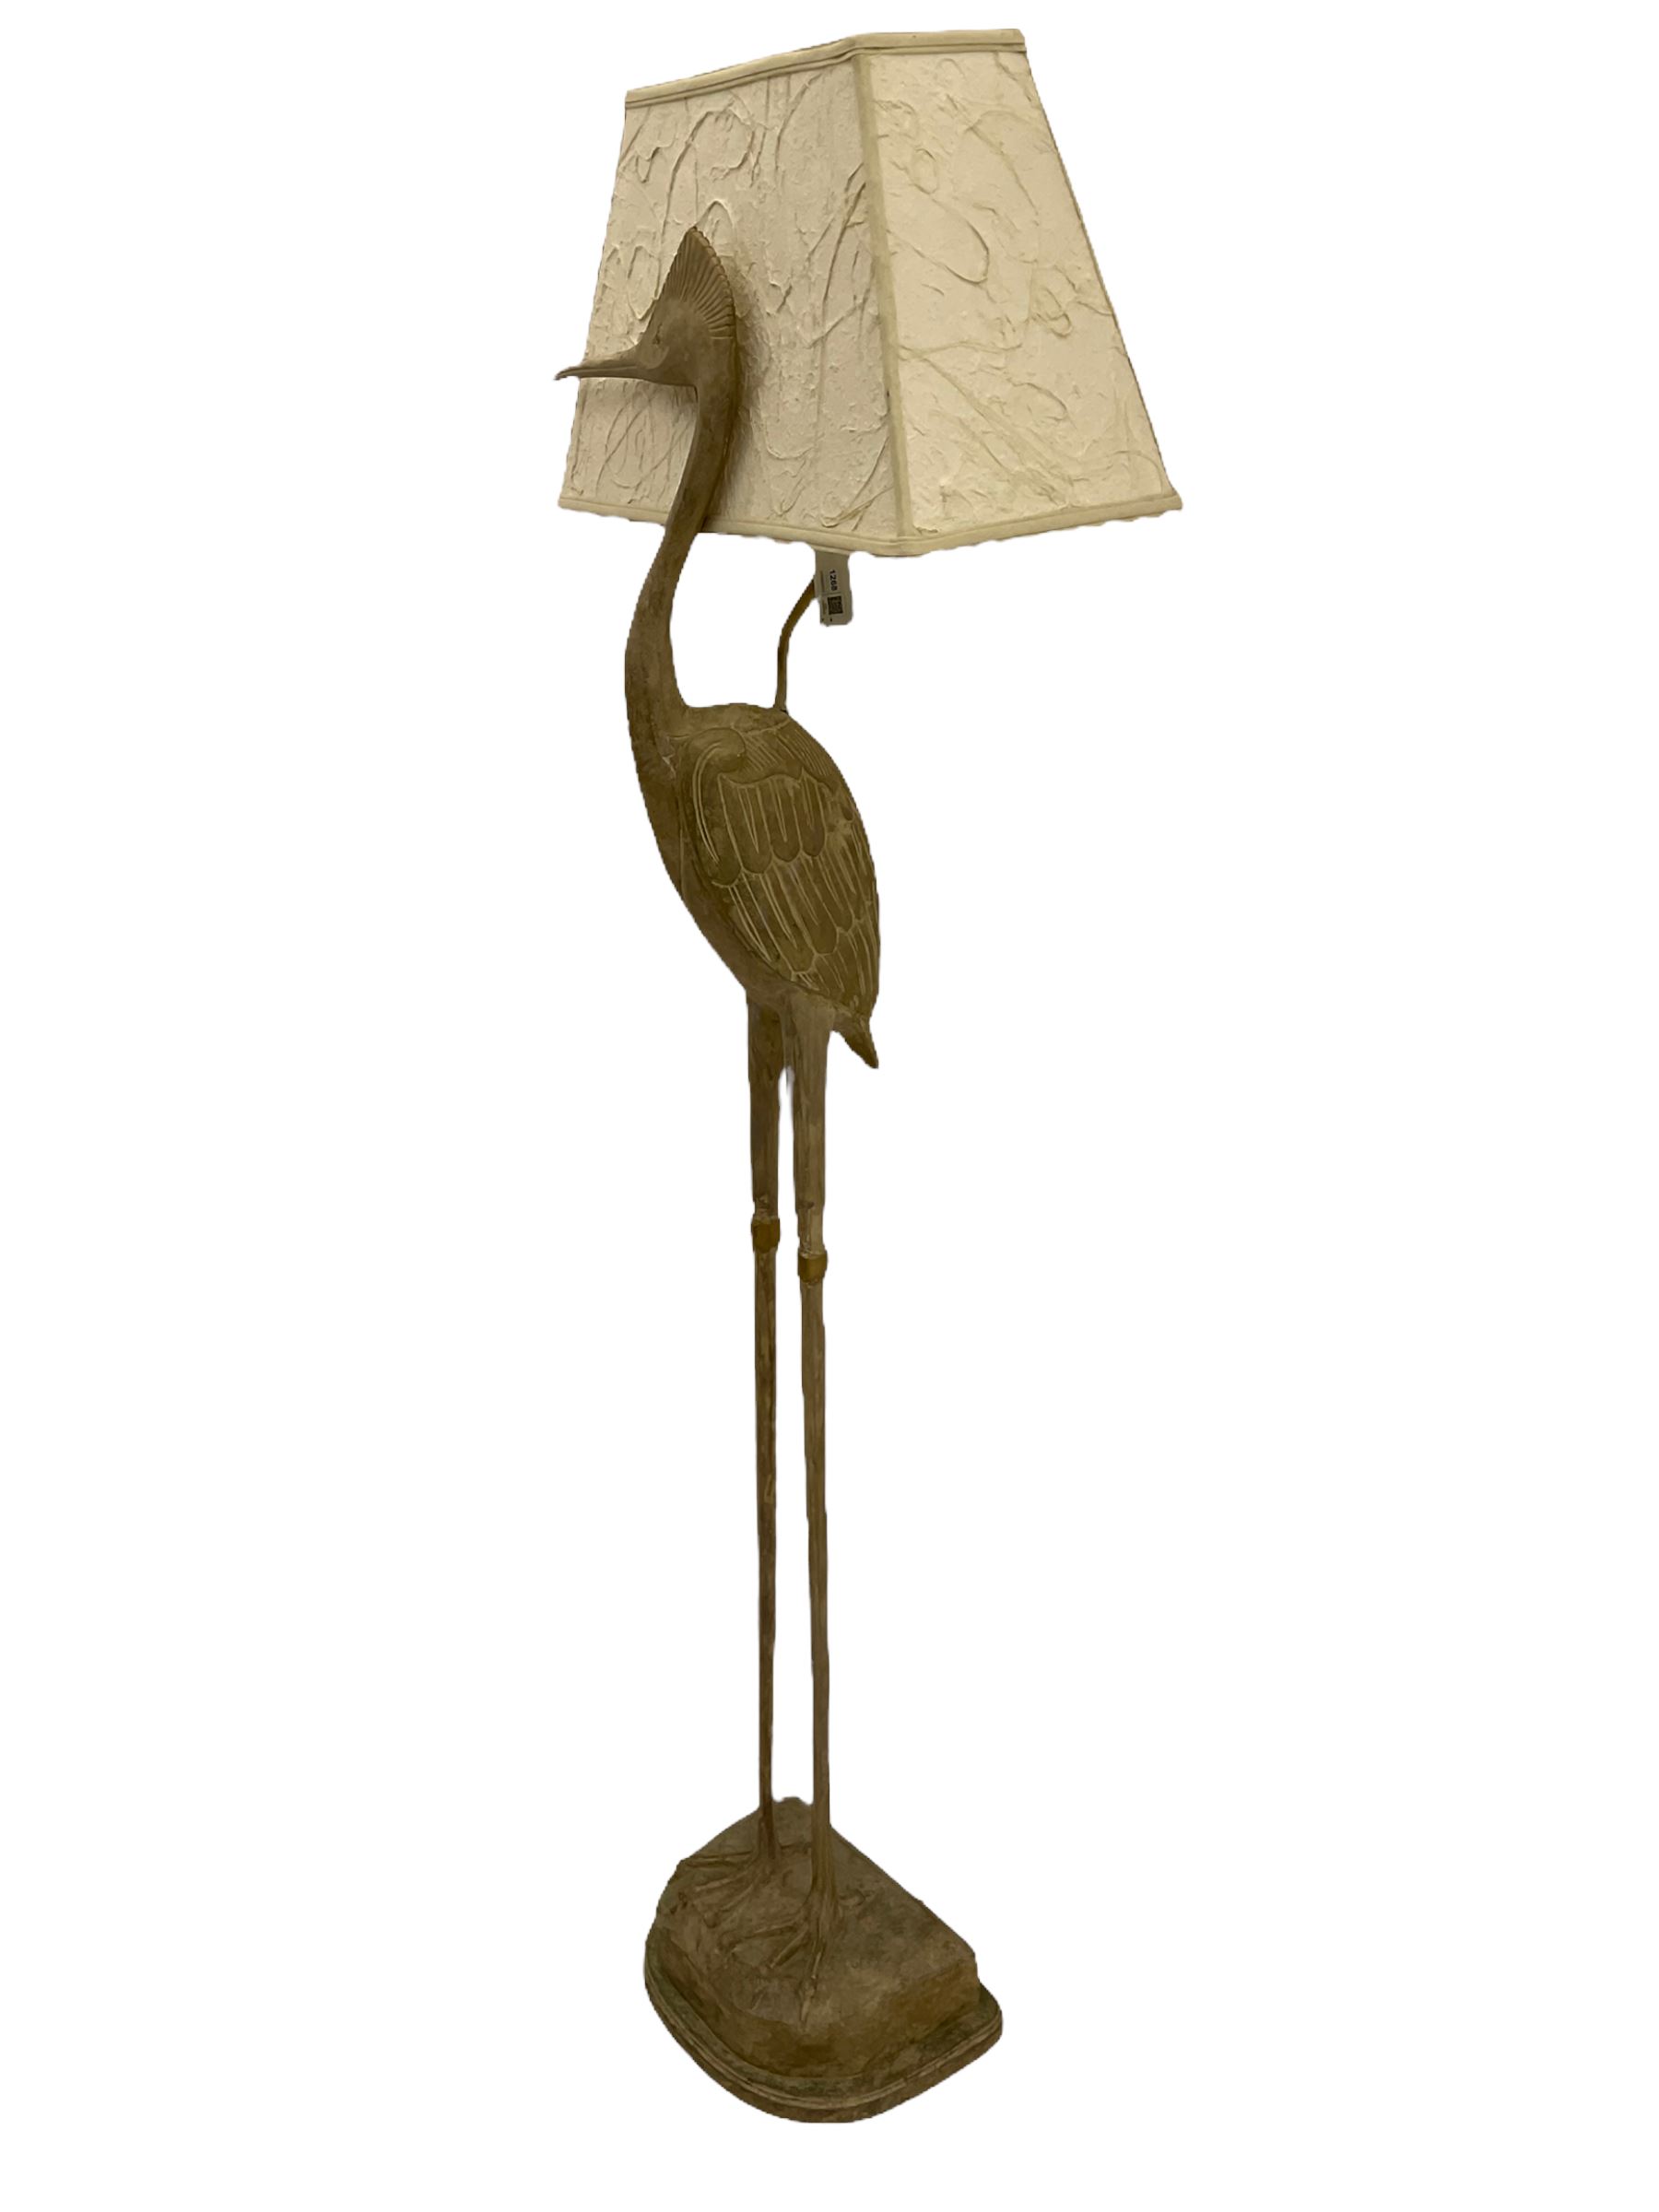 Carved wood standing heron standard lamp - Image 2 of 5